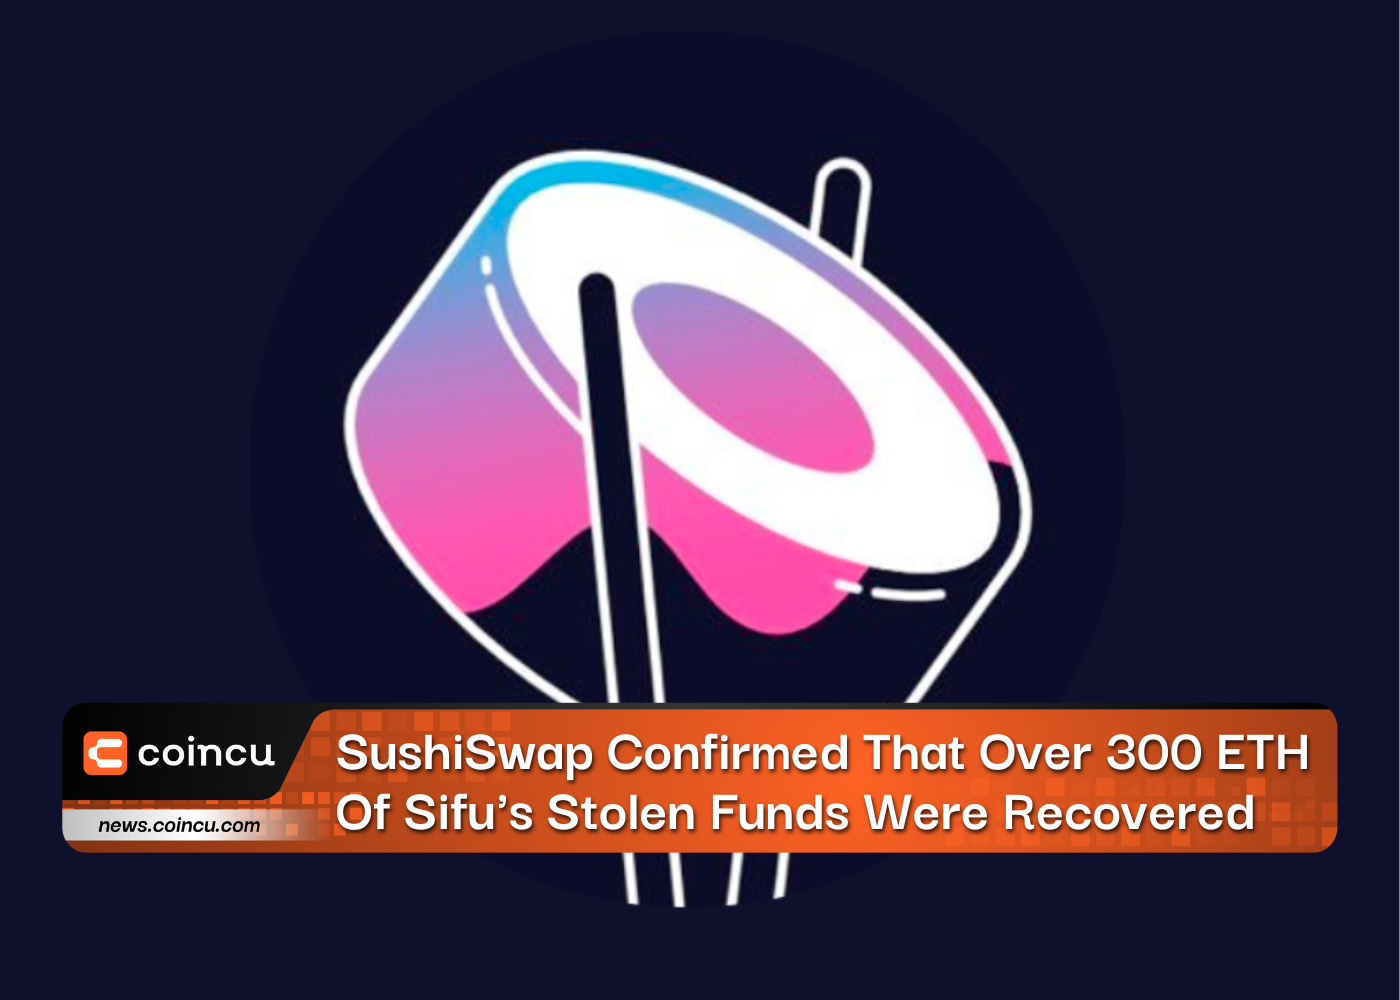 SushiSwap은 Sifu의 도난 자금 중 300ETH 이상이 회수되었음을 확인했습니다.